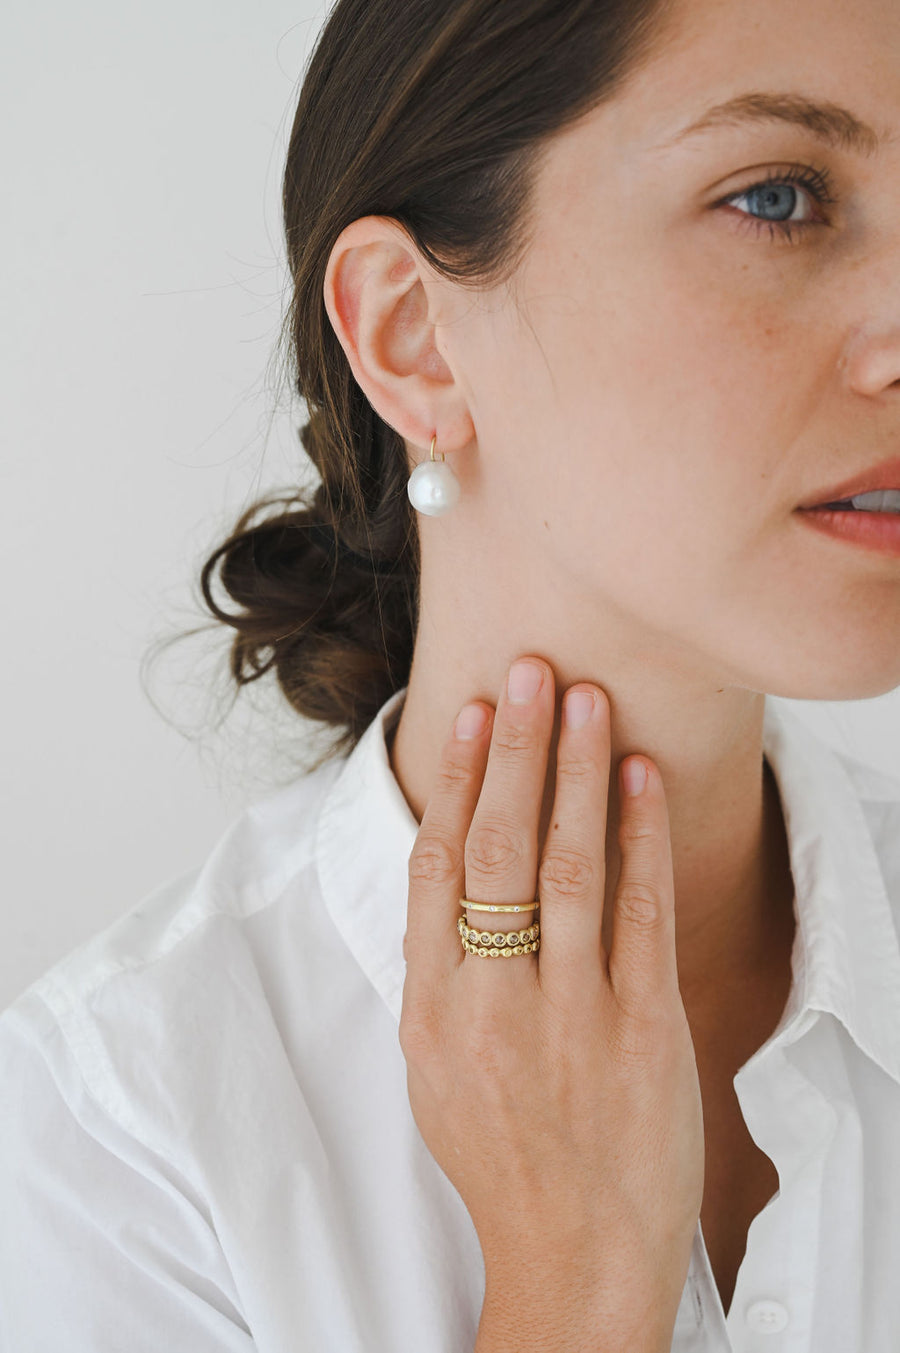 18 Karat Gold White South Sea Baroque Pearl Earrings